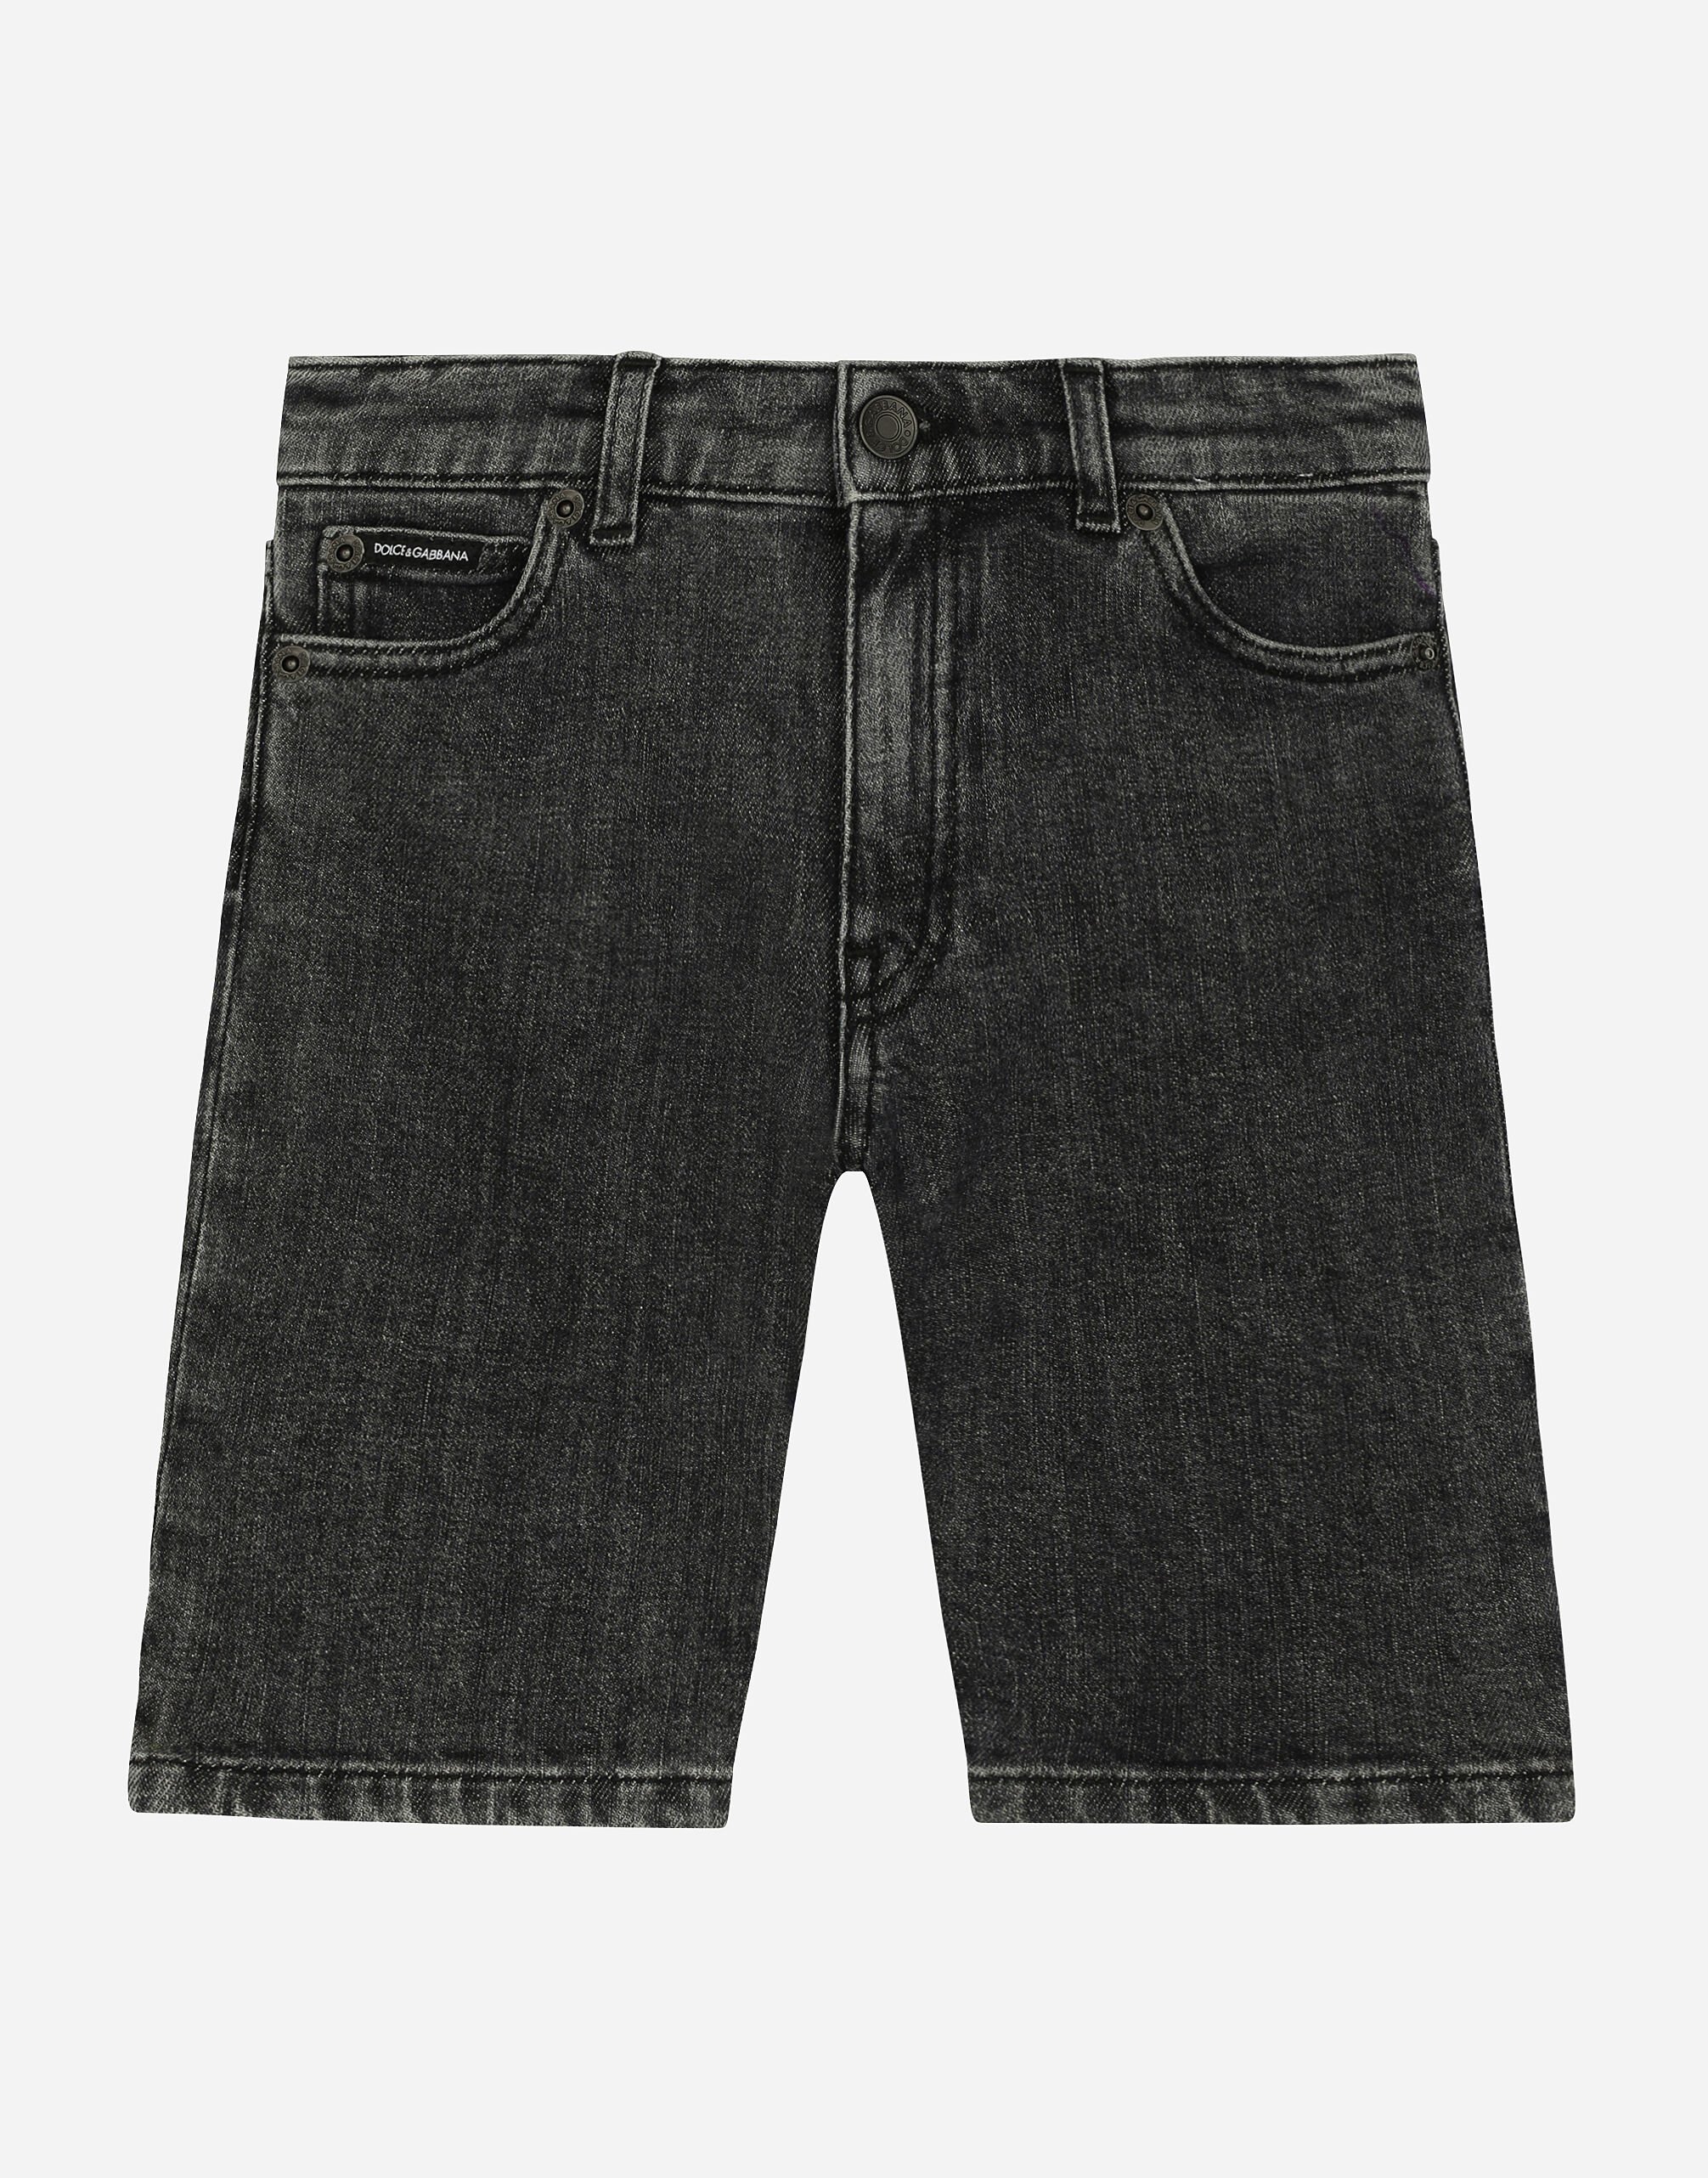 Dolce & Gabbana 5-pocket denim shorts Black L4JTEYG7K8Z